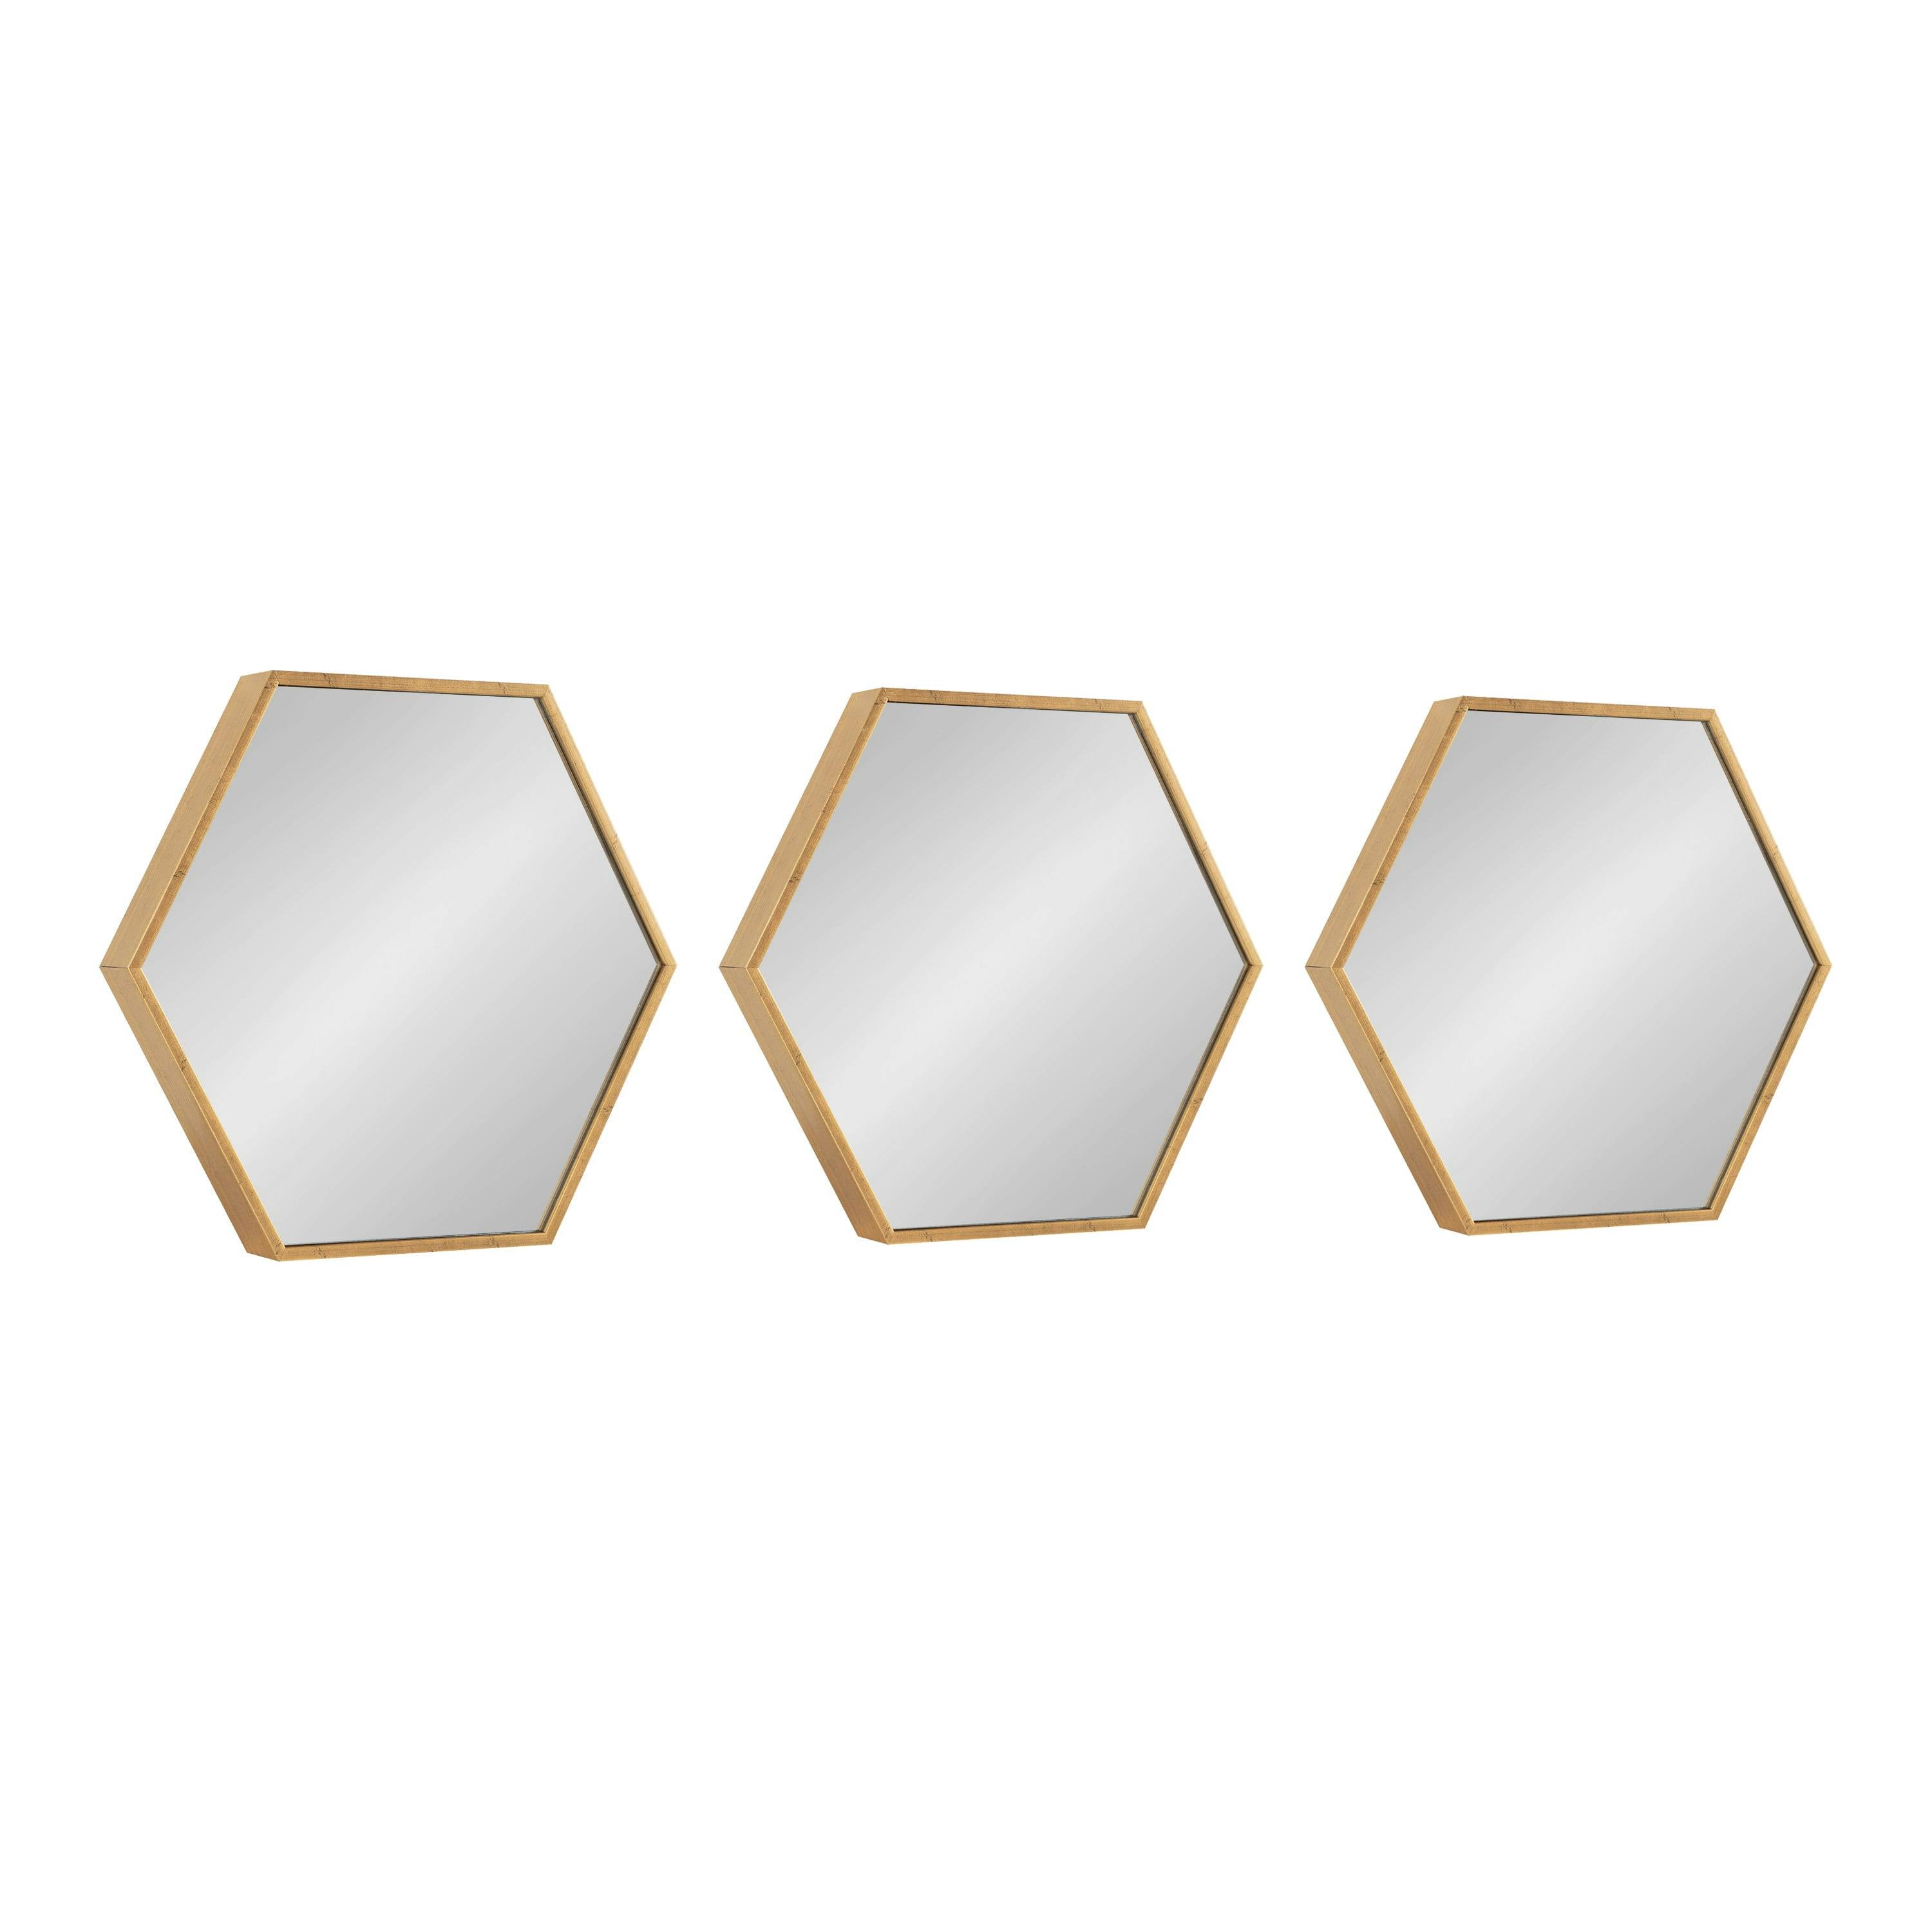 Rhodes Gold Hexagon Wall Mirror Set, 14x16 inches